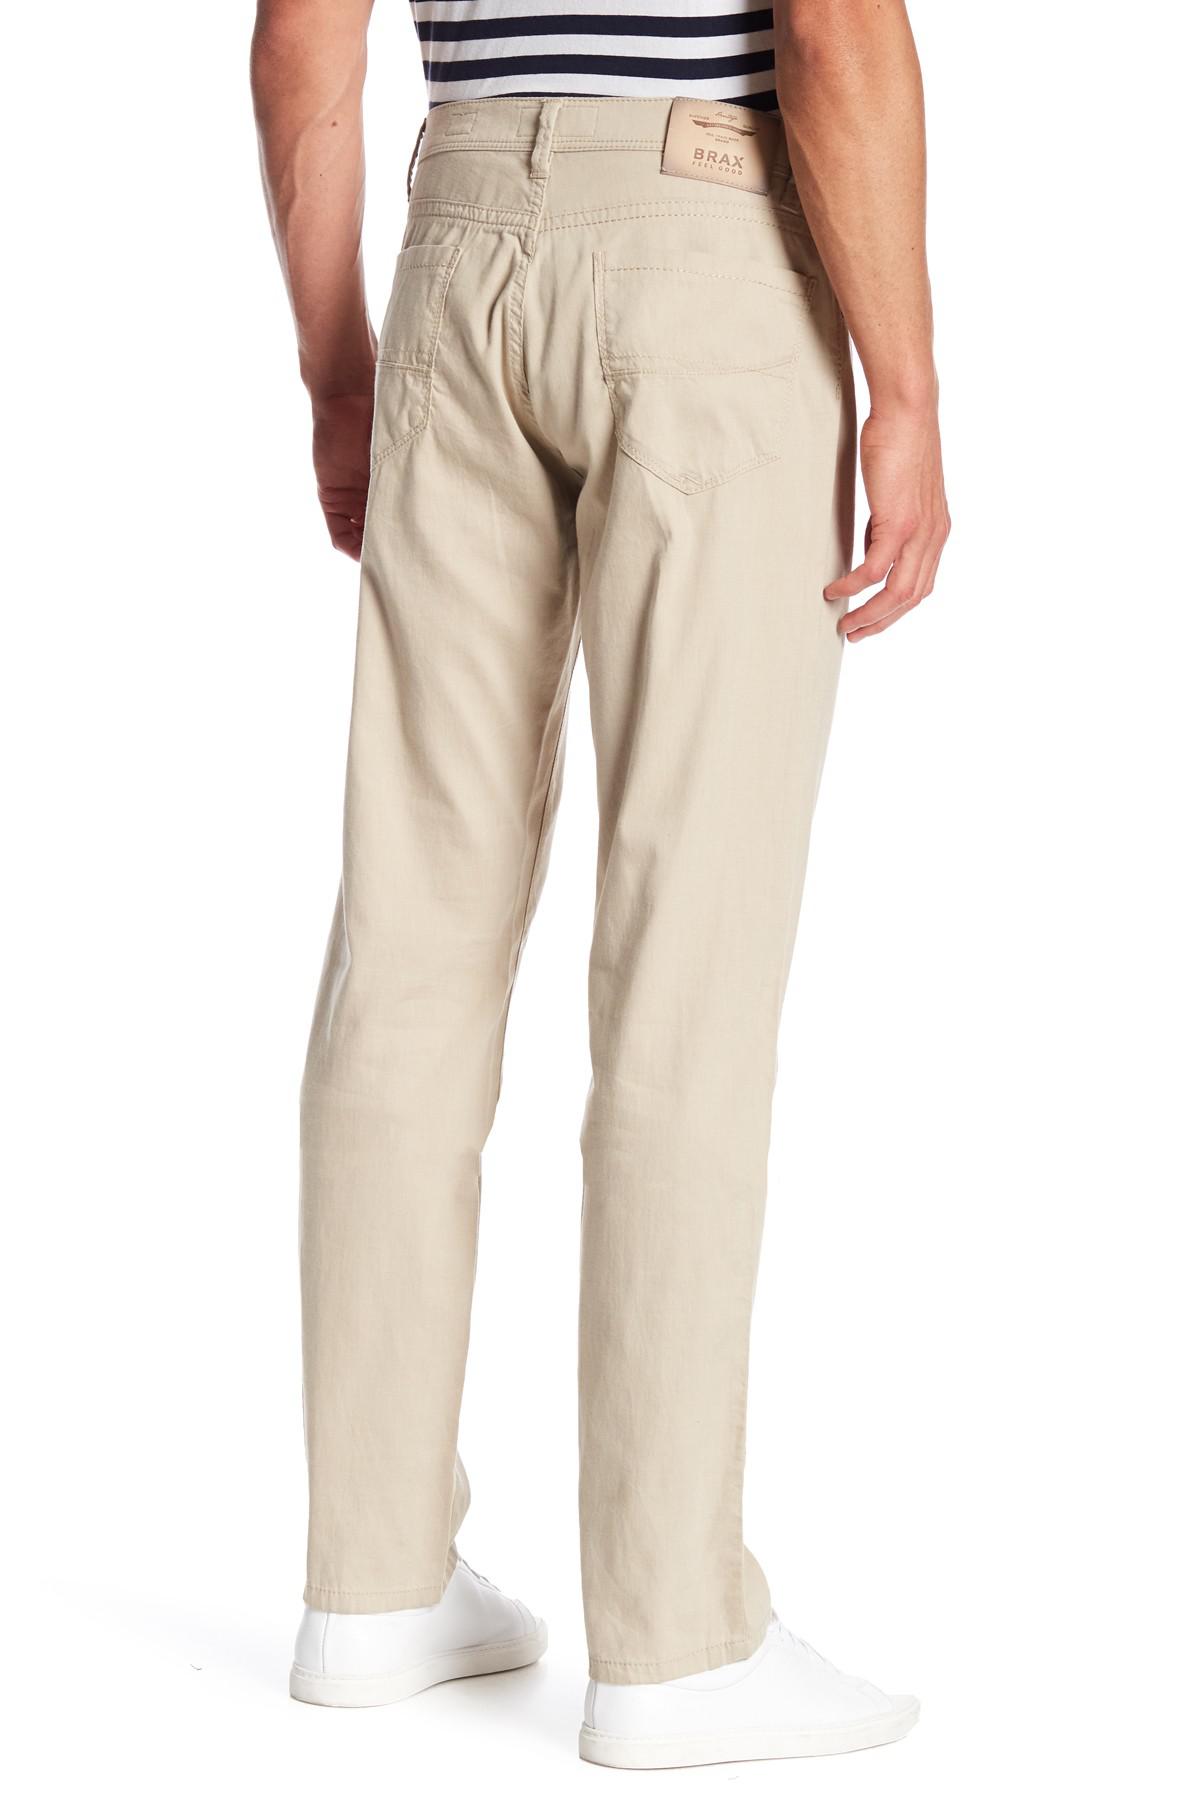 Brax Cotton Cadiz Lightweight Pants in Beige (Natural) for Men - Lyst